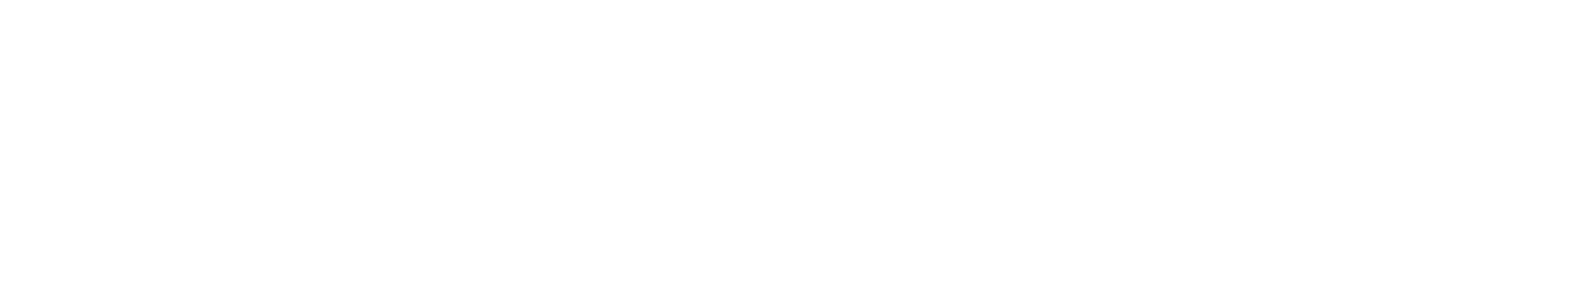 Lee Enterprises
 Logo groß für dunkle Hintergründe (transparentes PNG)